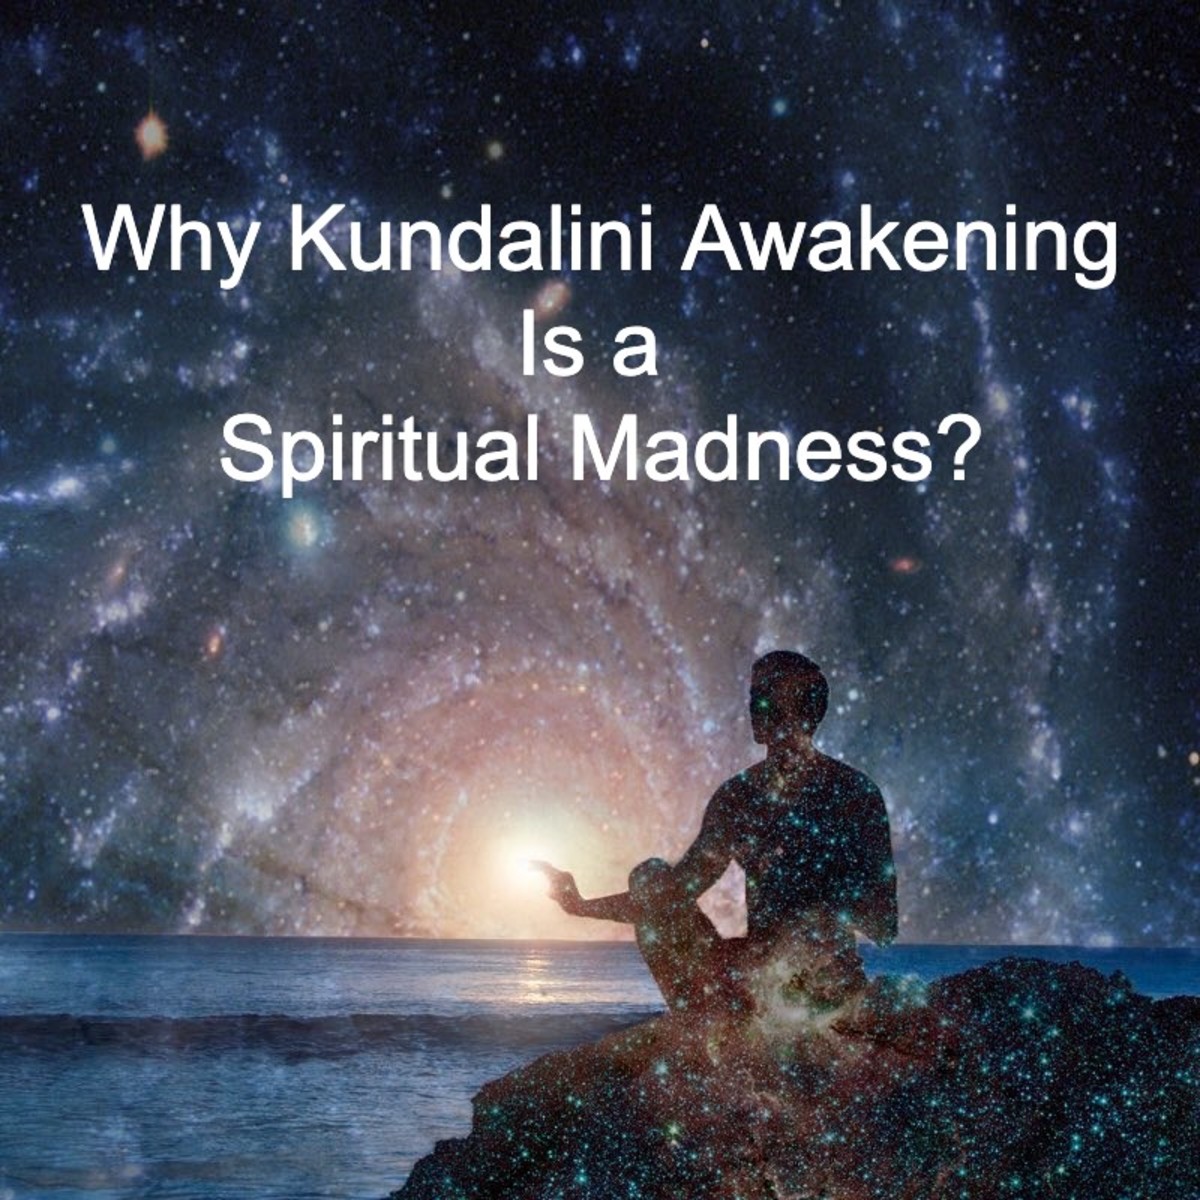 Why Kundalini Awakening Is a Spiritual Madness?